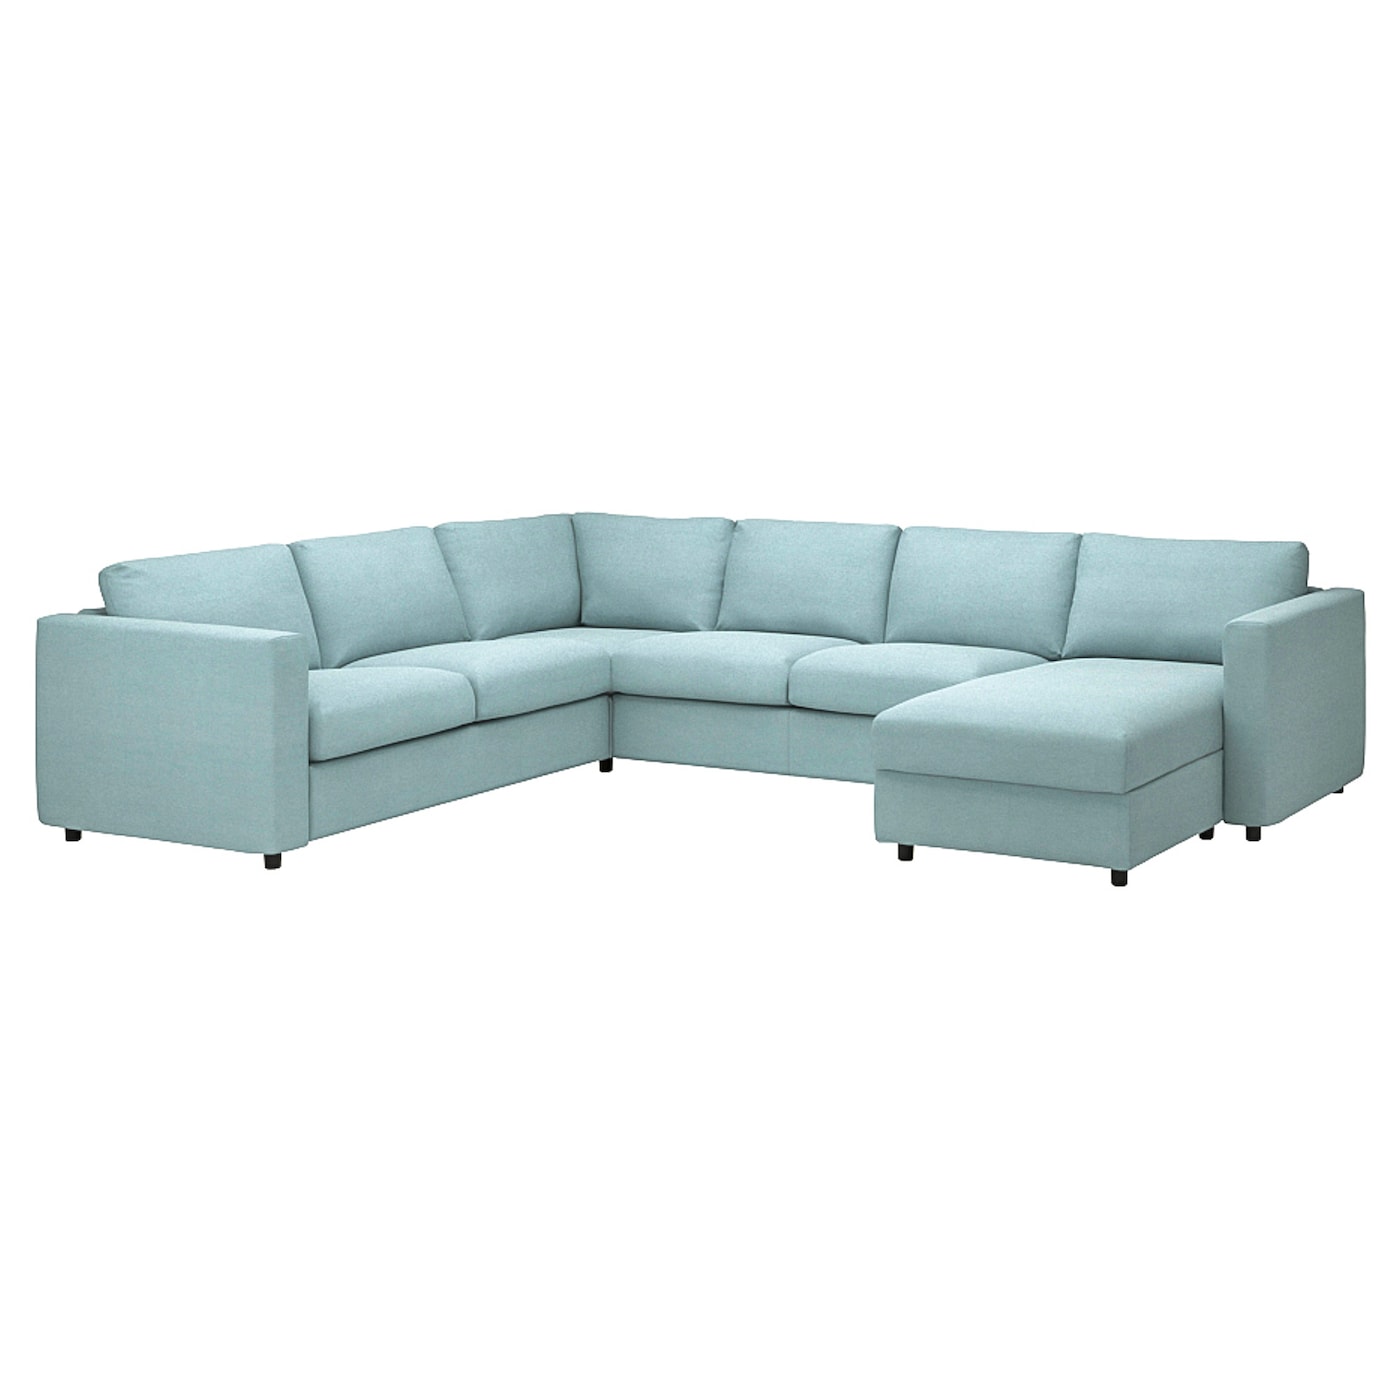 ВИМЛЕ Диван угловой, 5-местный. диван+диван, с диваном/Saxemara светло-синий VIMLE IKEA угловой диван fortune шоколадный